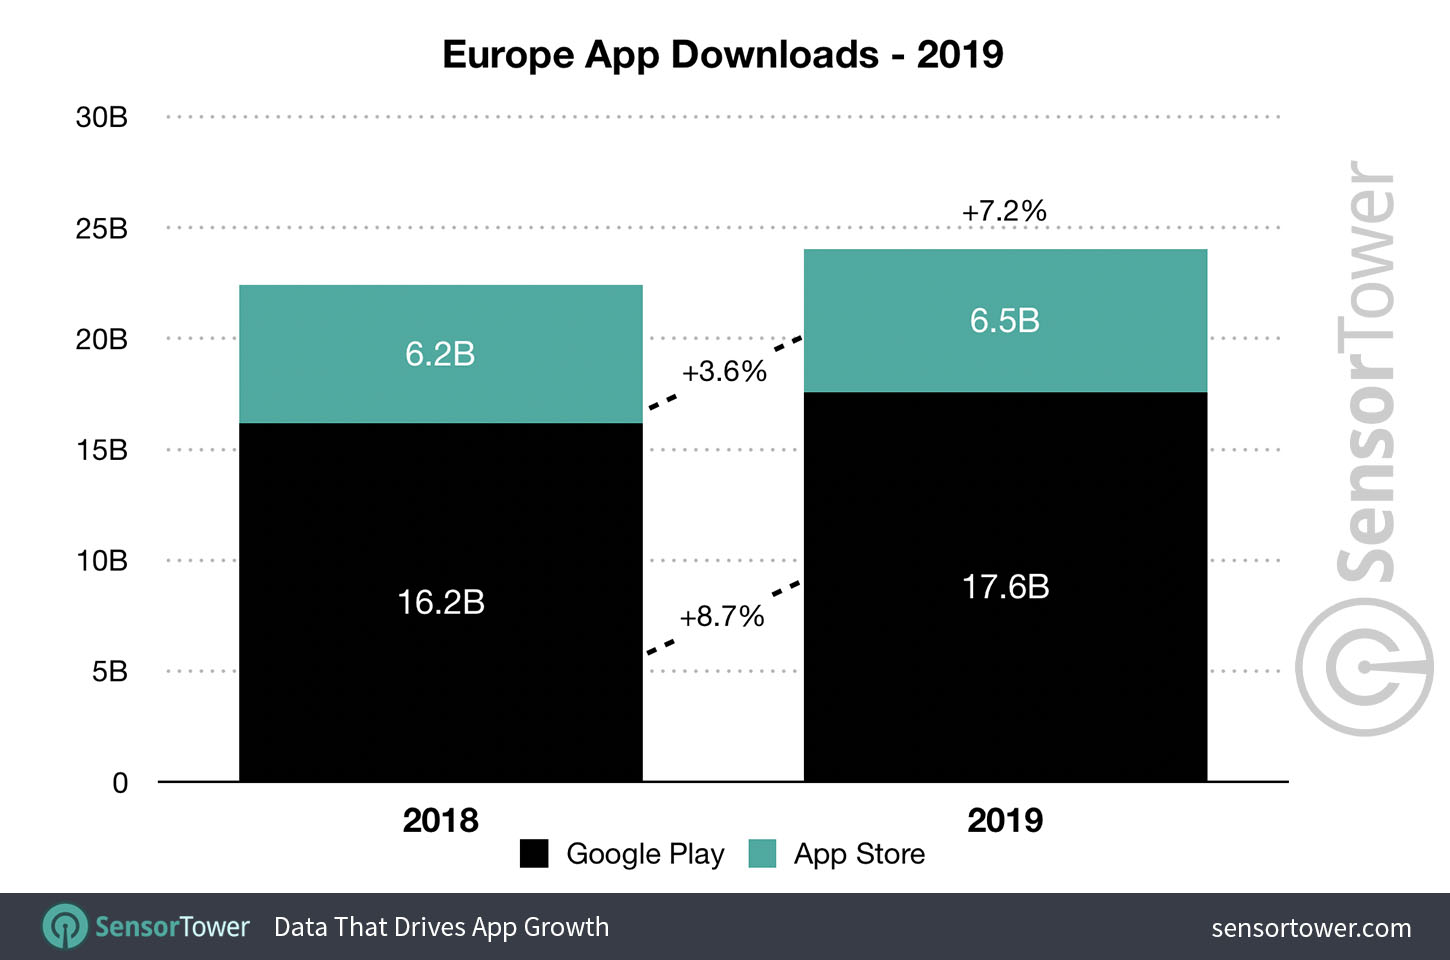 European app downloads grew to 24.1 billion in 2019